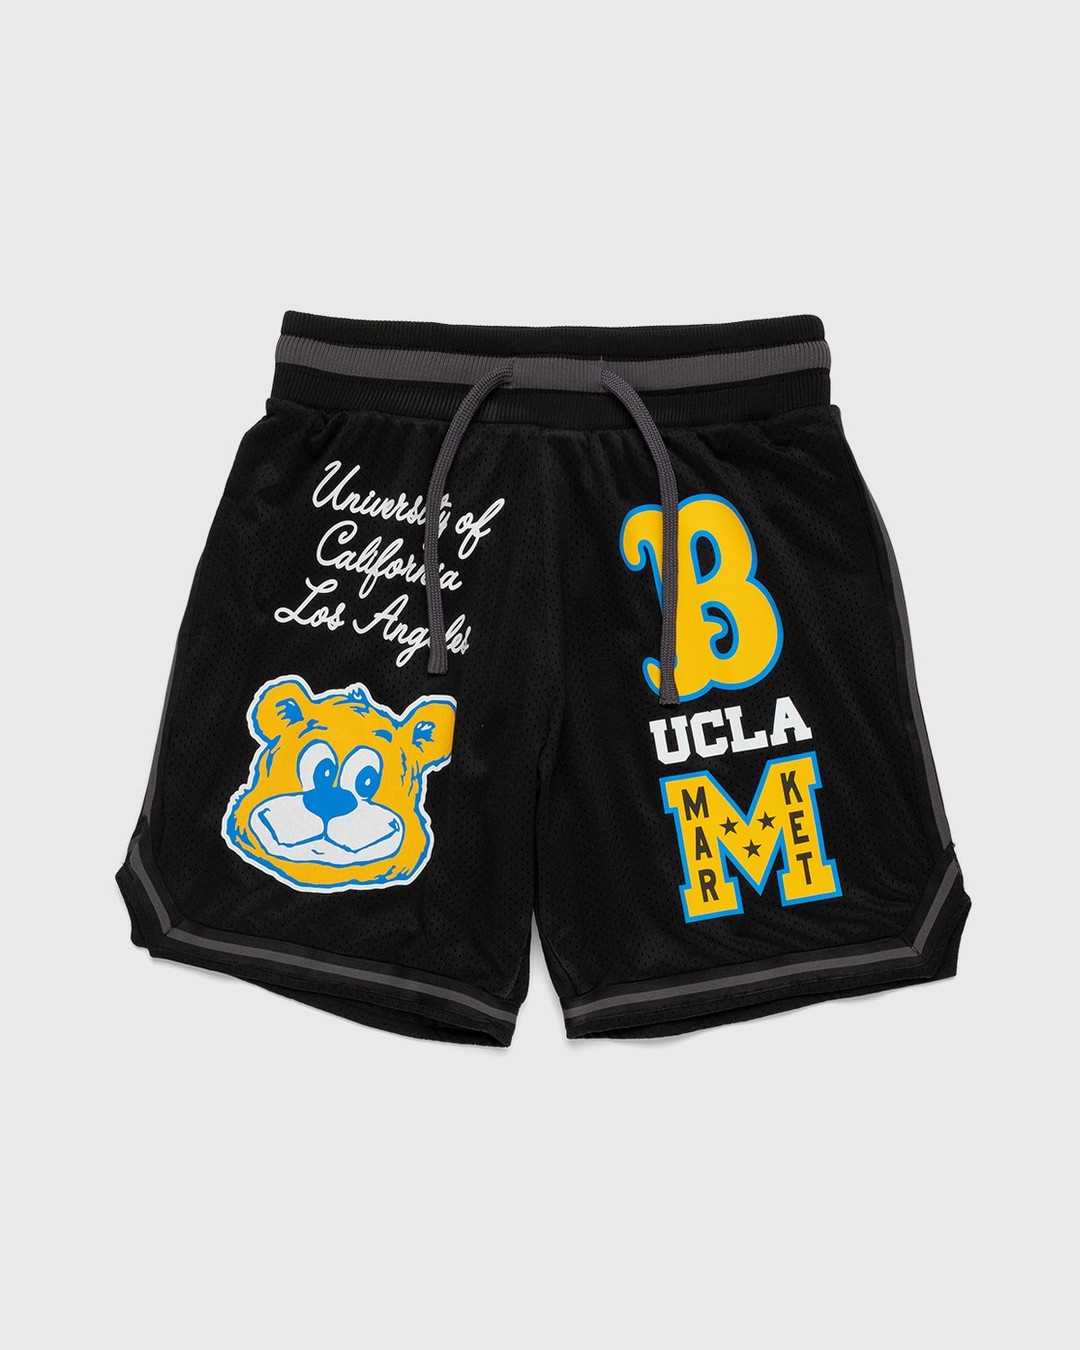 Market x UCLA x Highsnobiety – HS Sports Mesh Bruin Shorts Black - Shorts - Black - Image 1